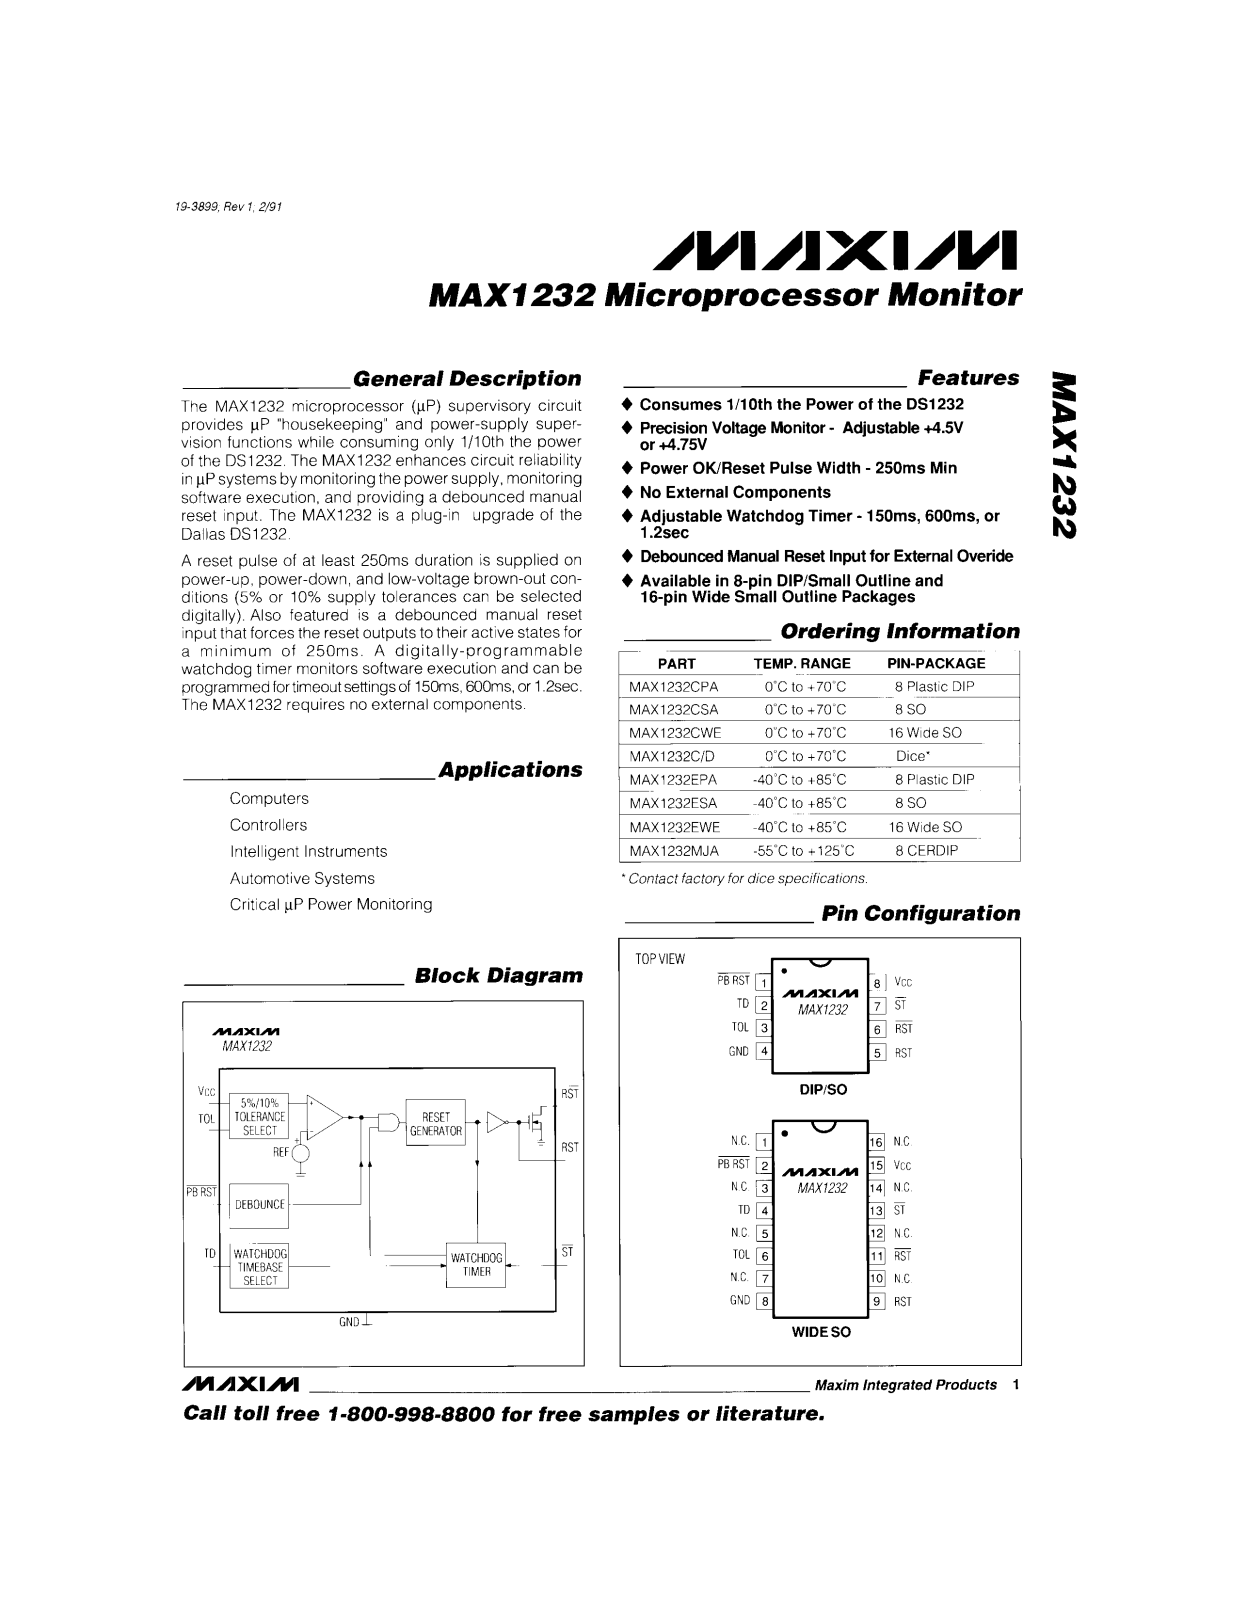 Maxim MAX1232MJA, MAX1232ESA, MAX1232EPA, MAX1232CWE, MAX1232CSA Datasheet